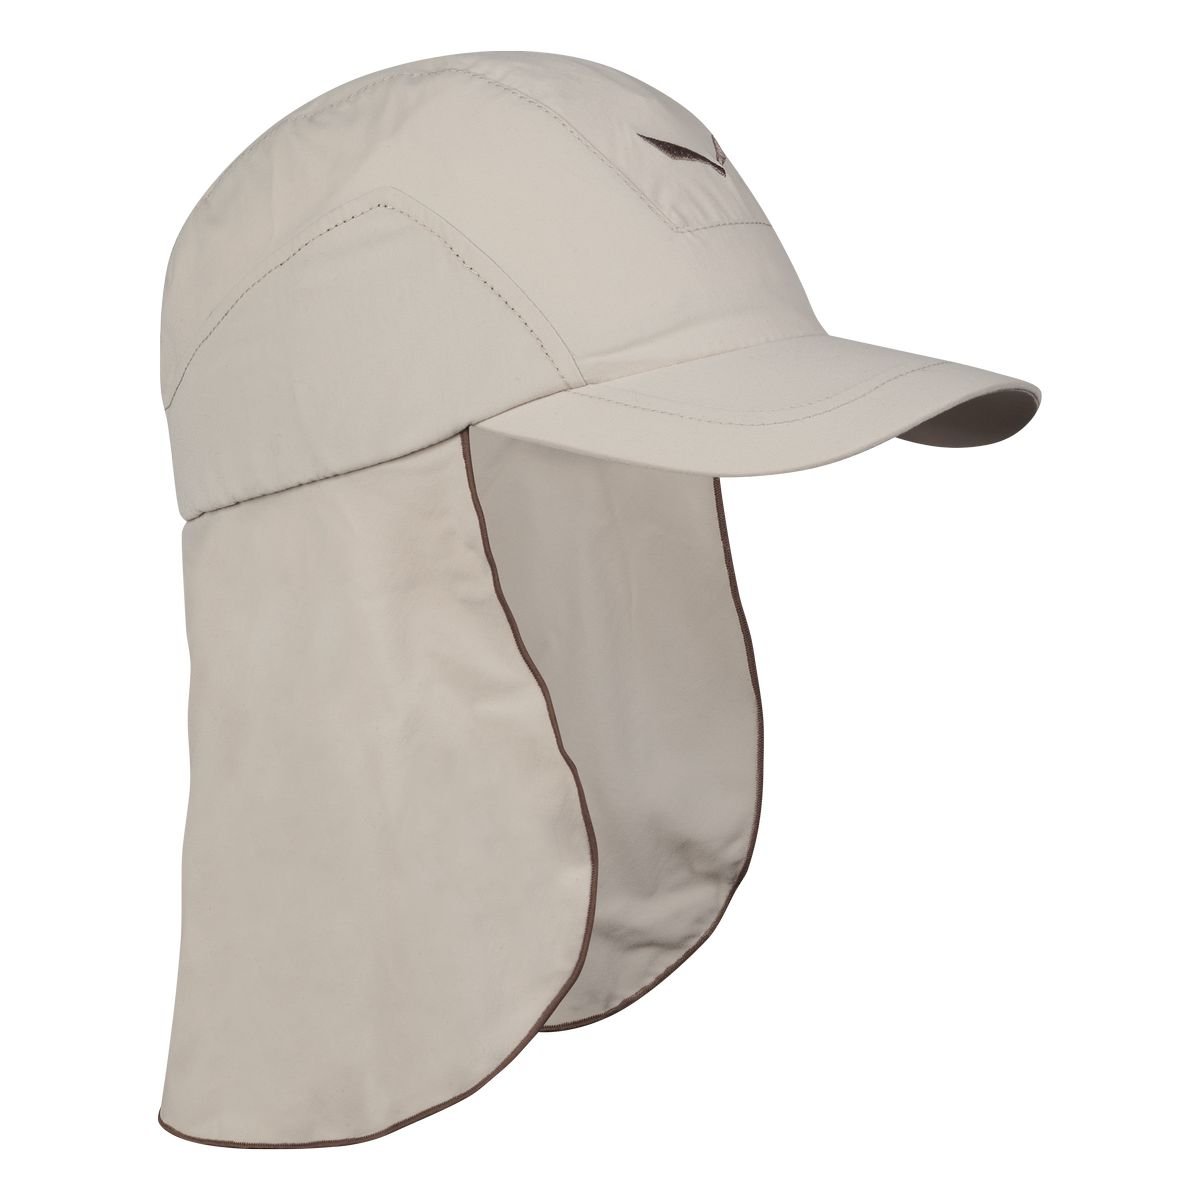 Велобейсболка Salewa 2016 PUEZ (SUN PROT) NECK GAIT CAP, белая, размер: M/58, 24735_7200